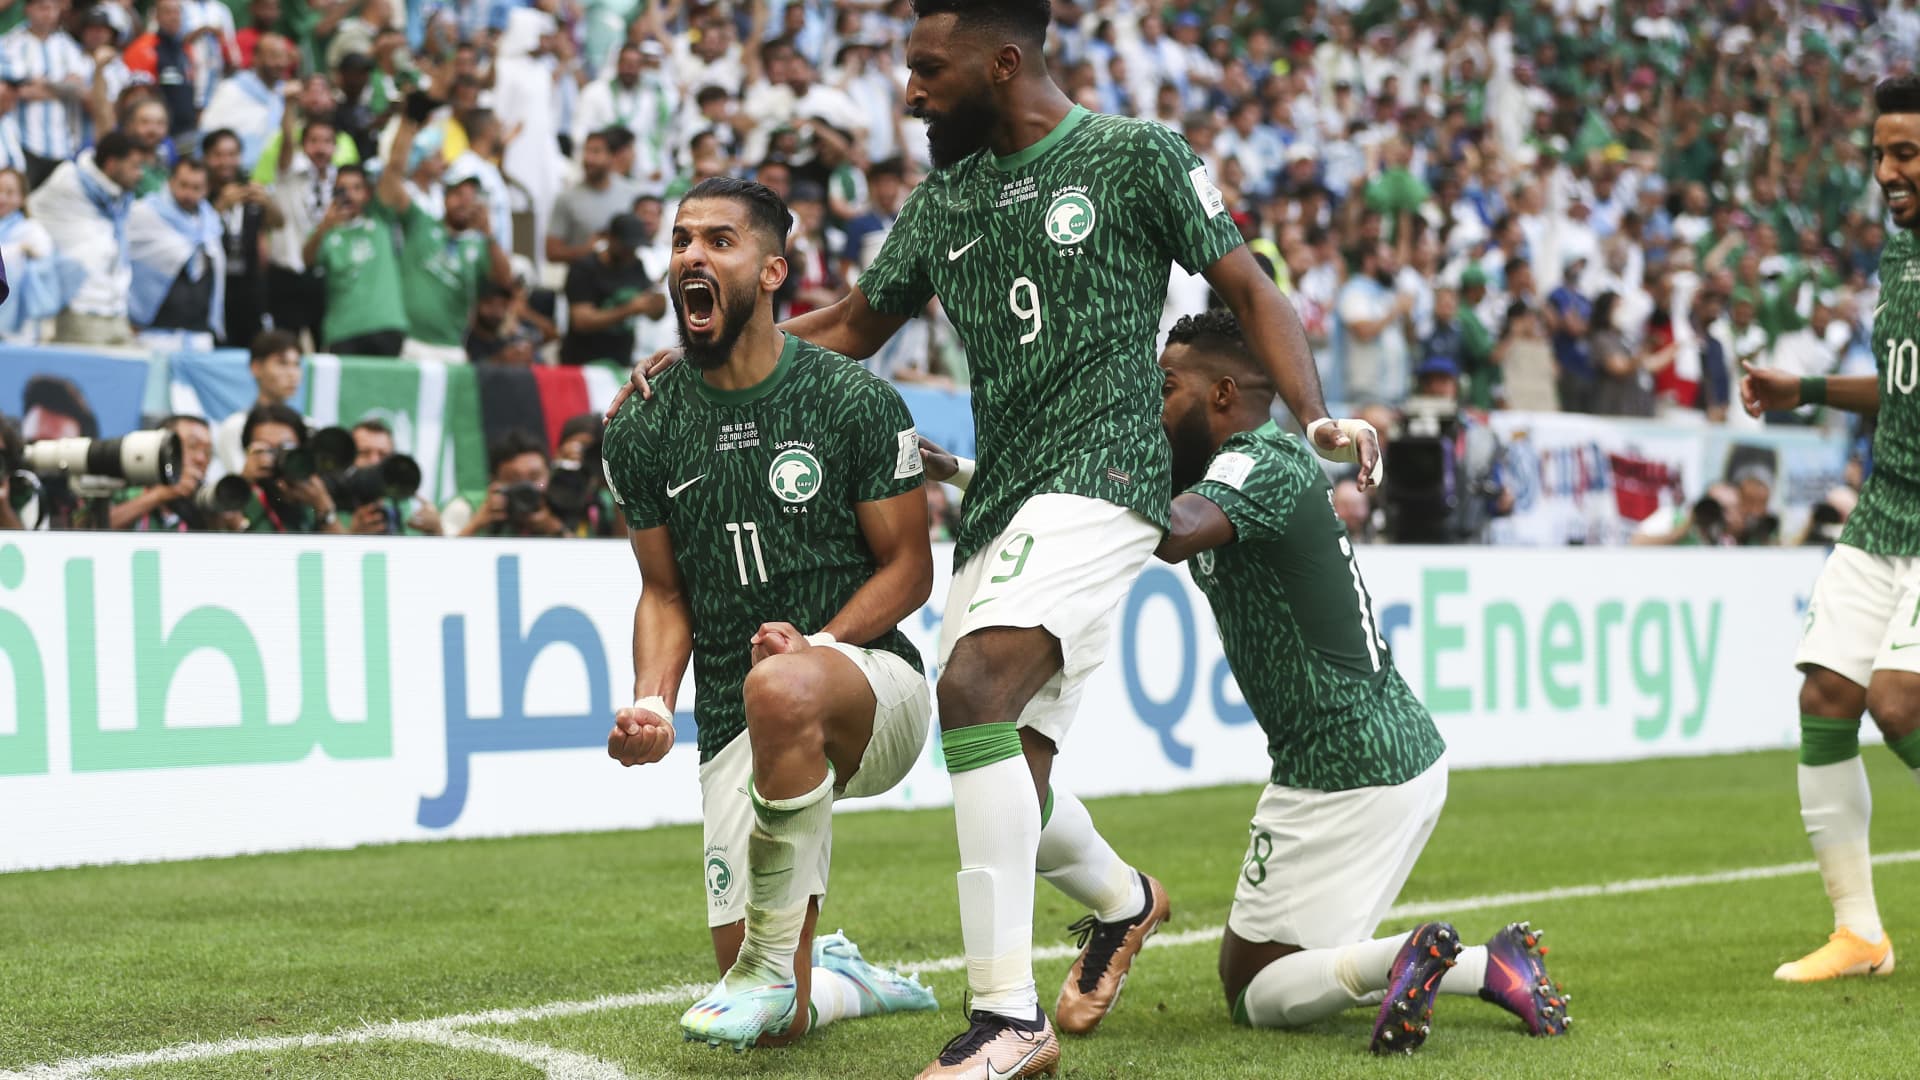 Saudi Arabia to host 2034 soccer World Cup after Australia declines to bid